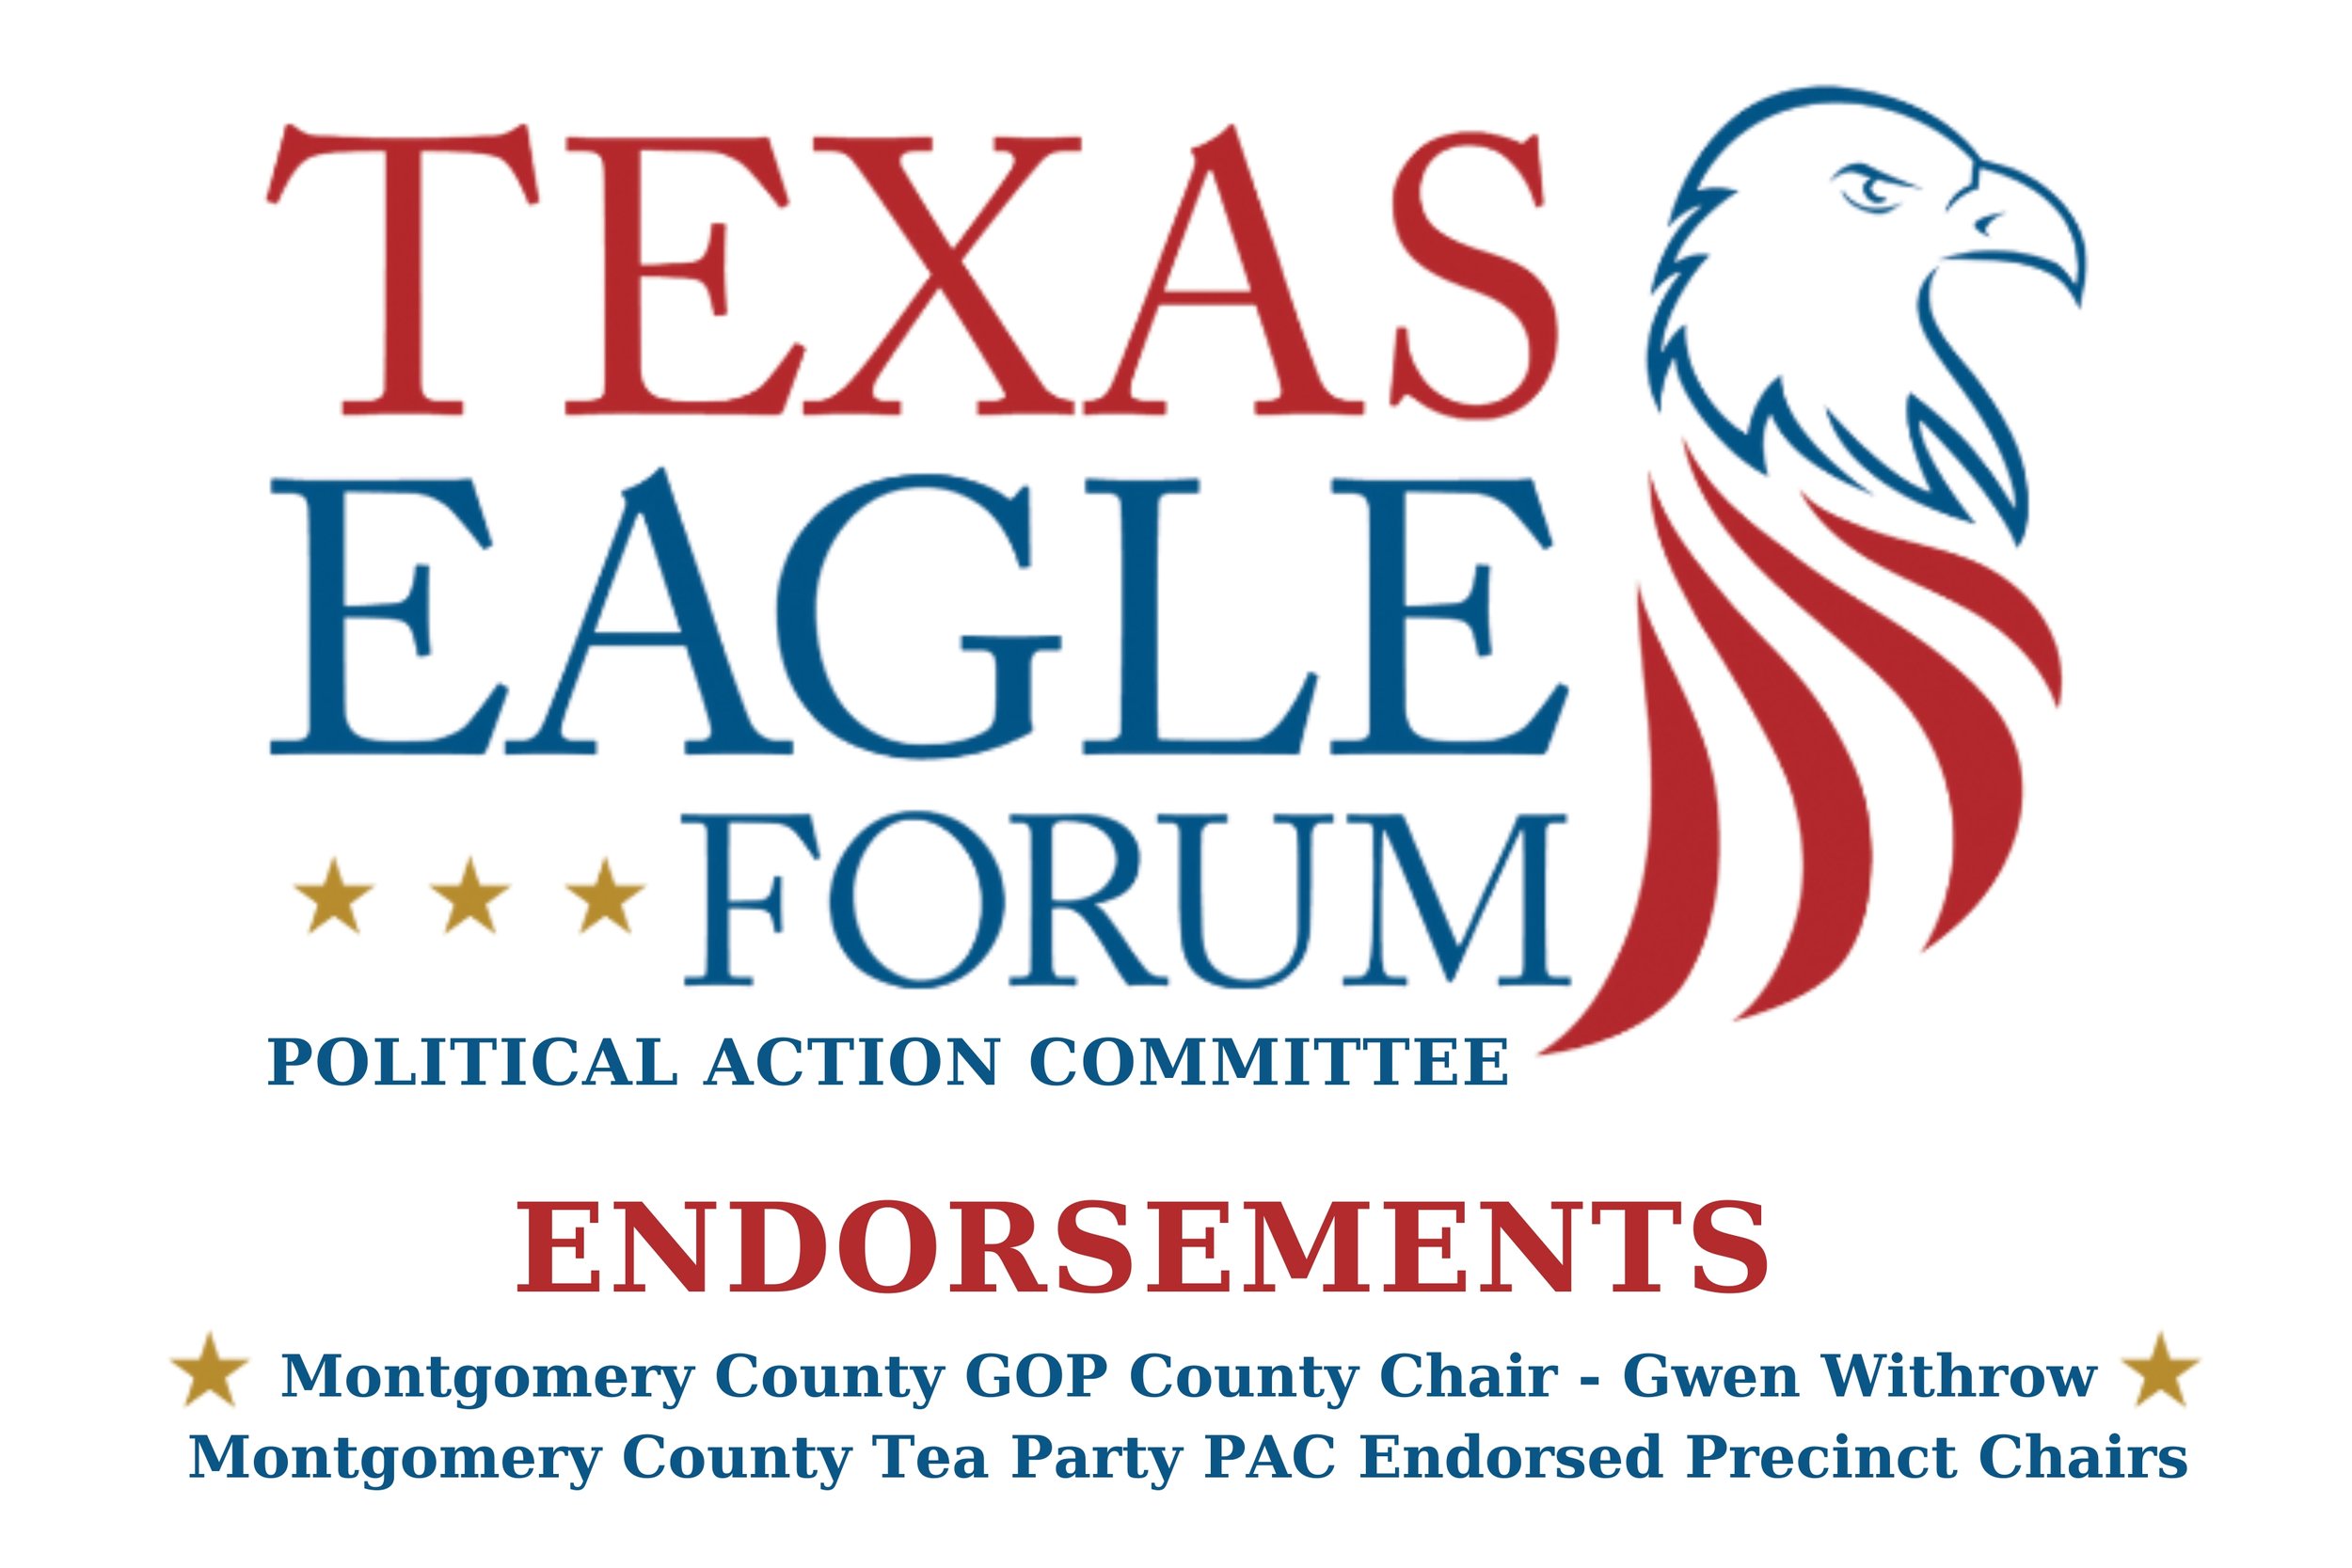 Texas Eagle Forum endorsements.jpg